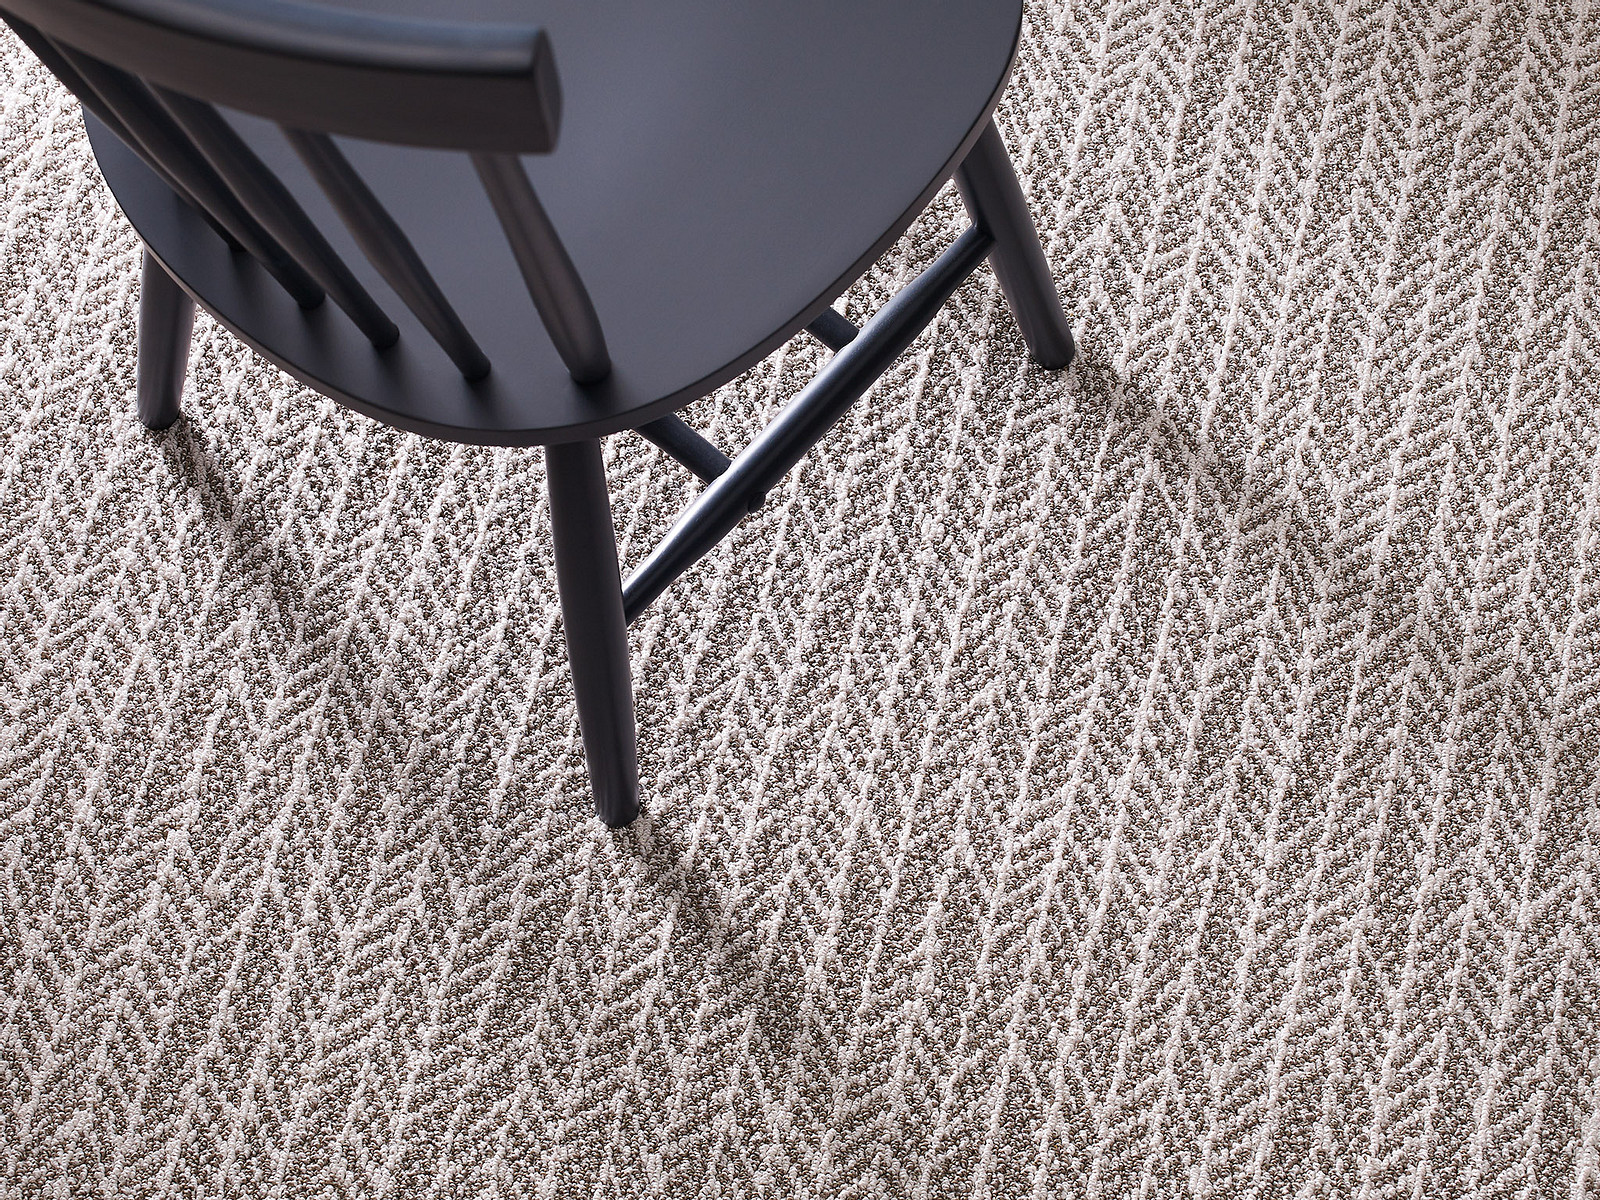 shaw carpet review image